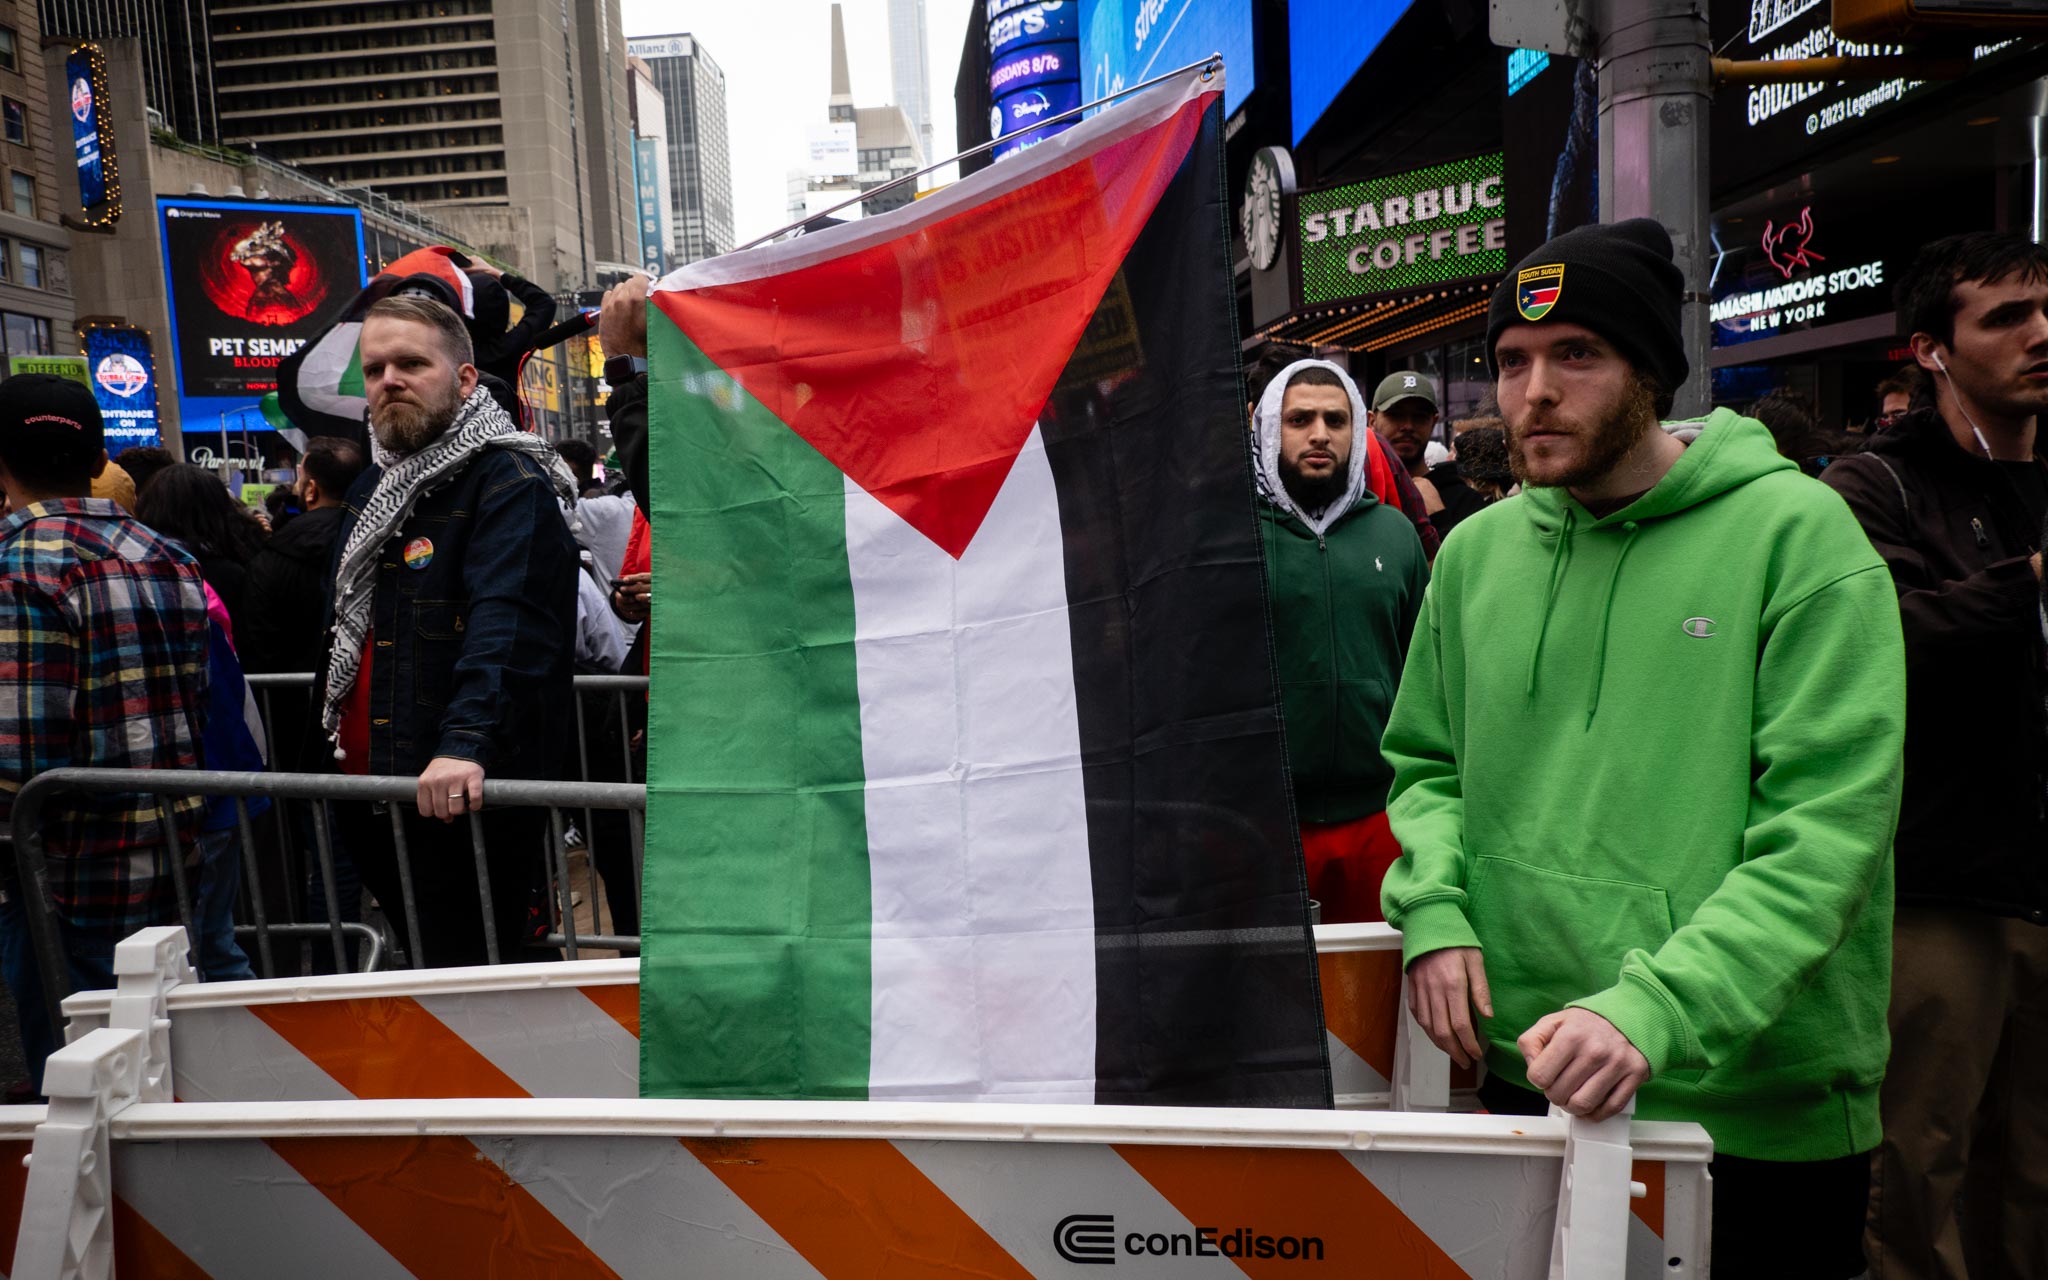 new york city pro palestine protest